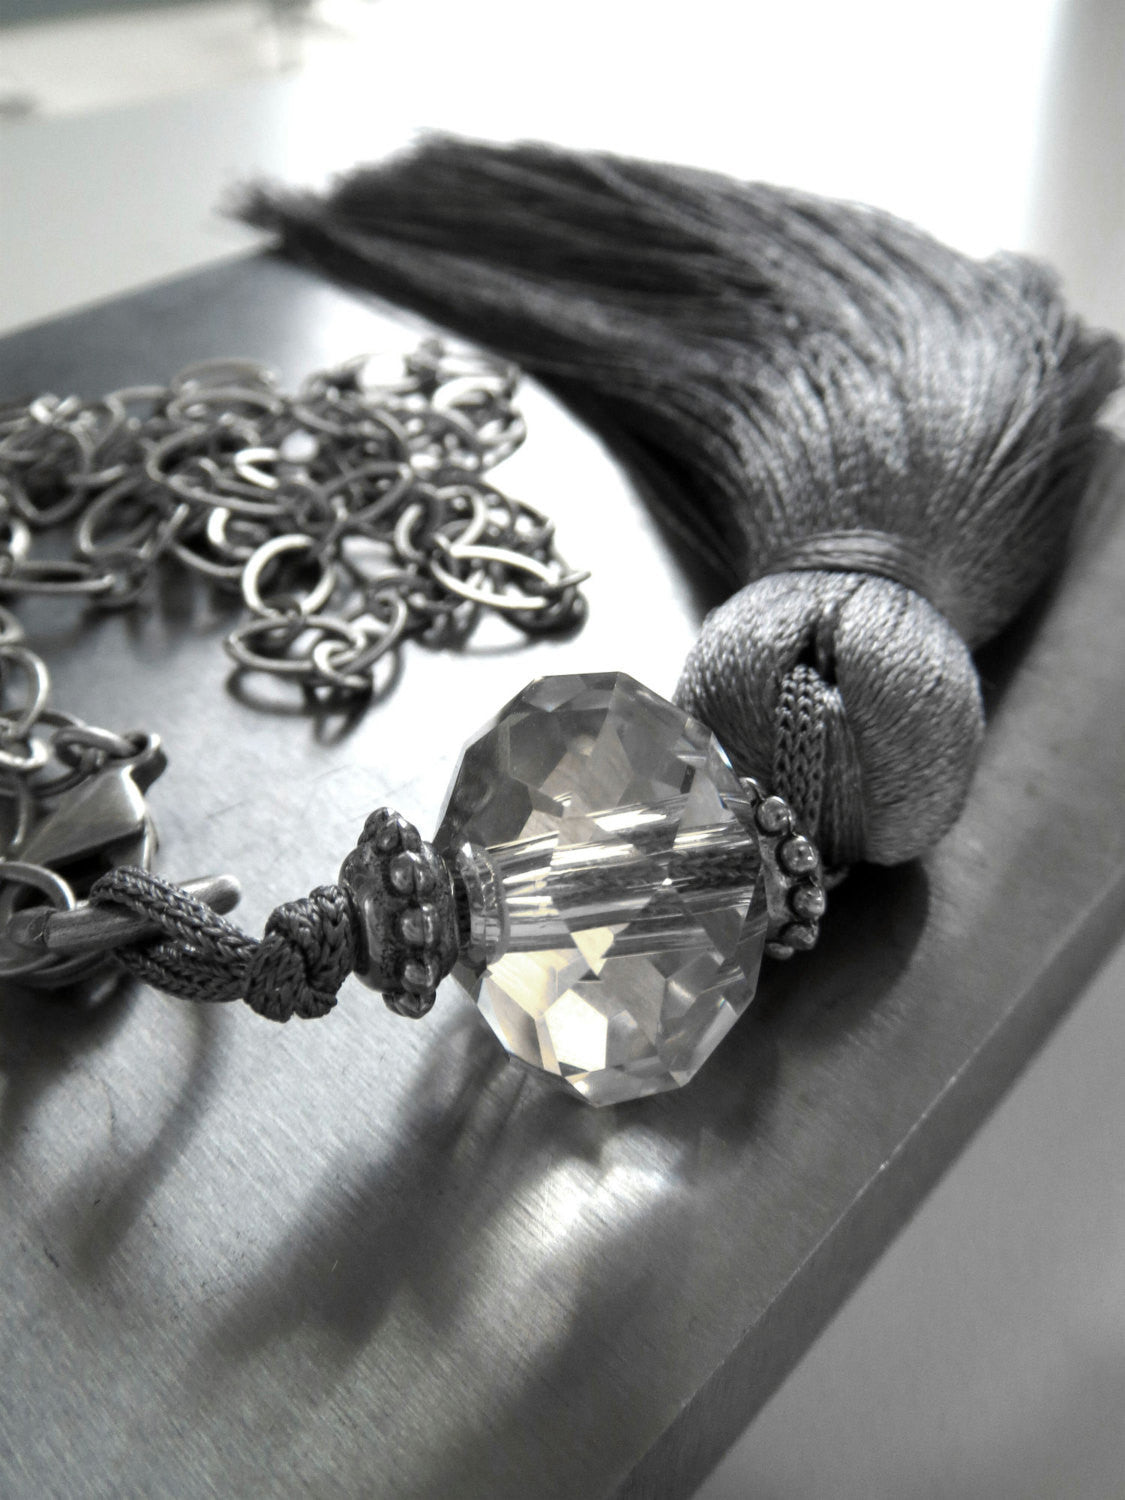 Grey Silk Tassel Necklace with  Crystal